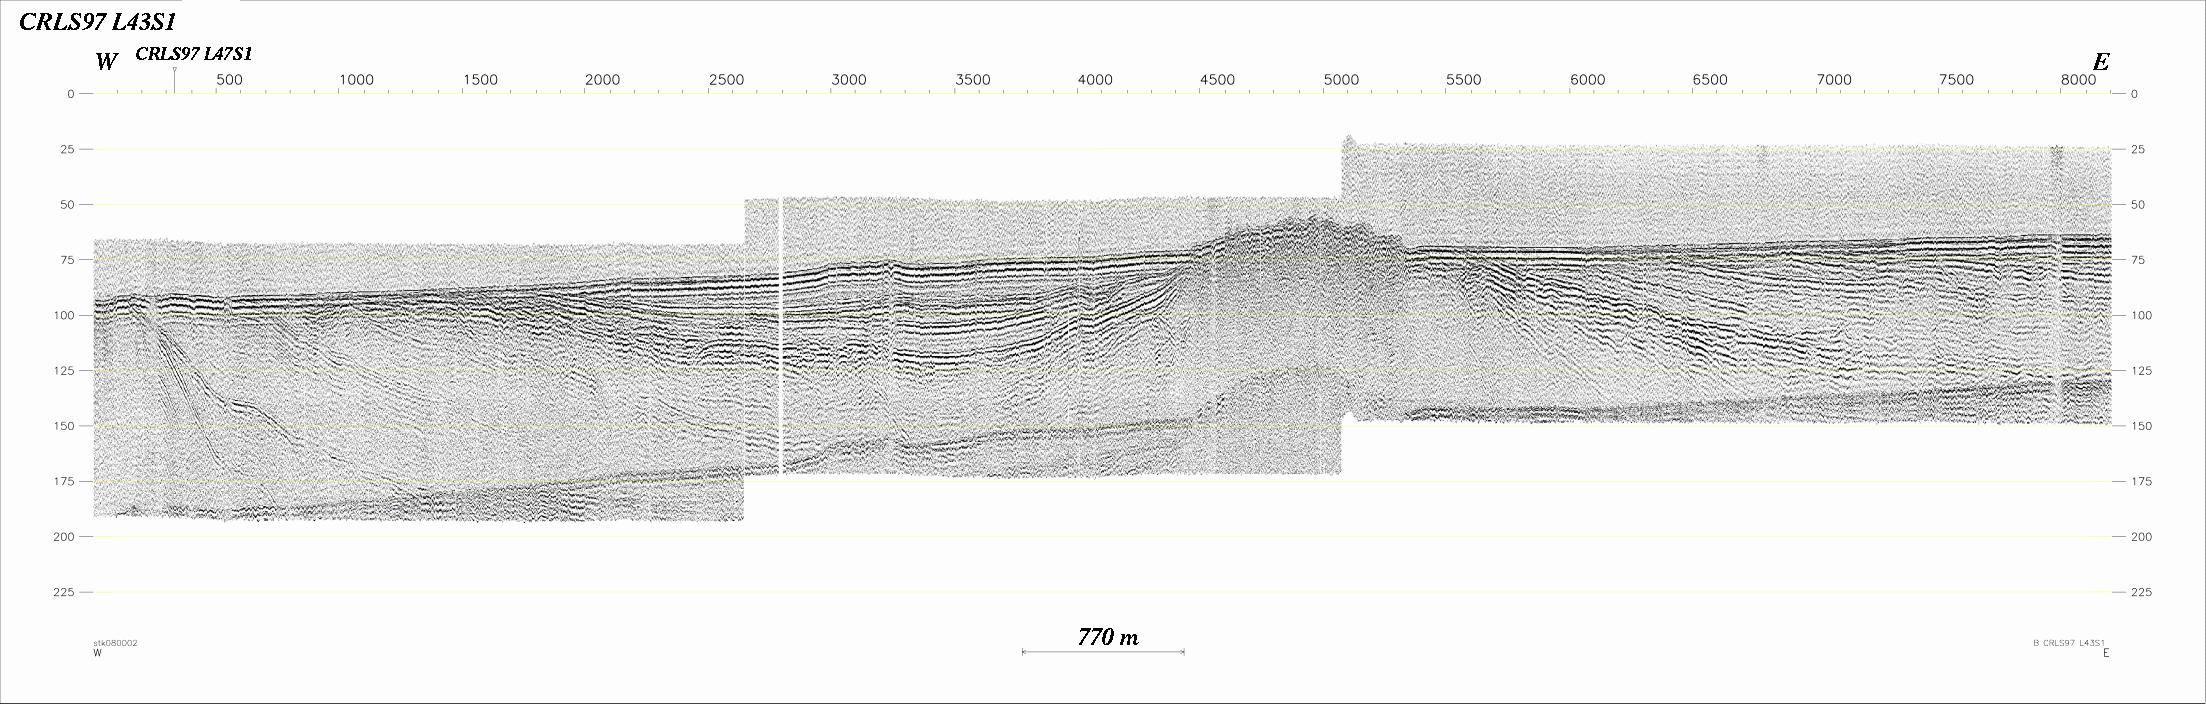 Seismic Reflection Profile Line No.: L43s1 (281963 bytes)